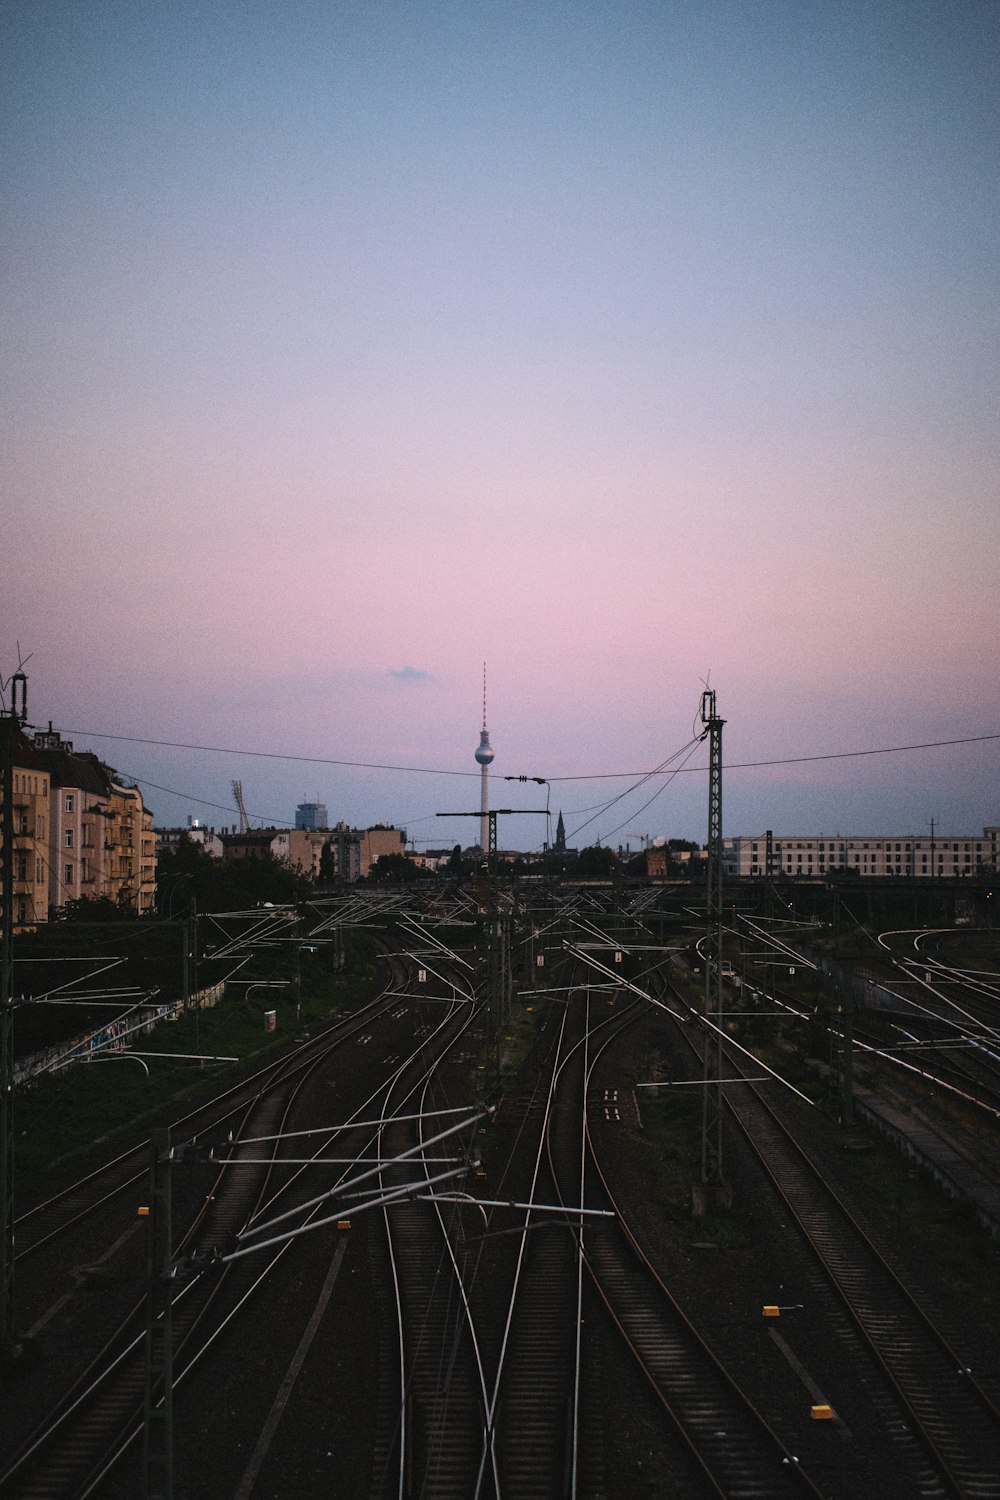 a view of a train yard at dusk